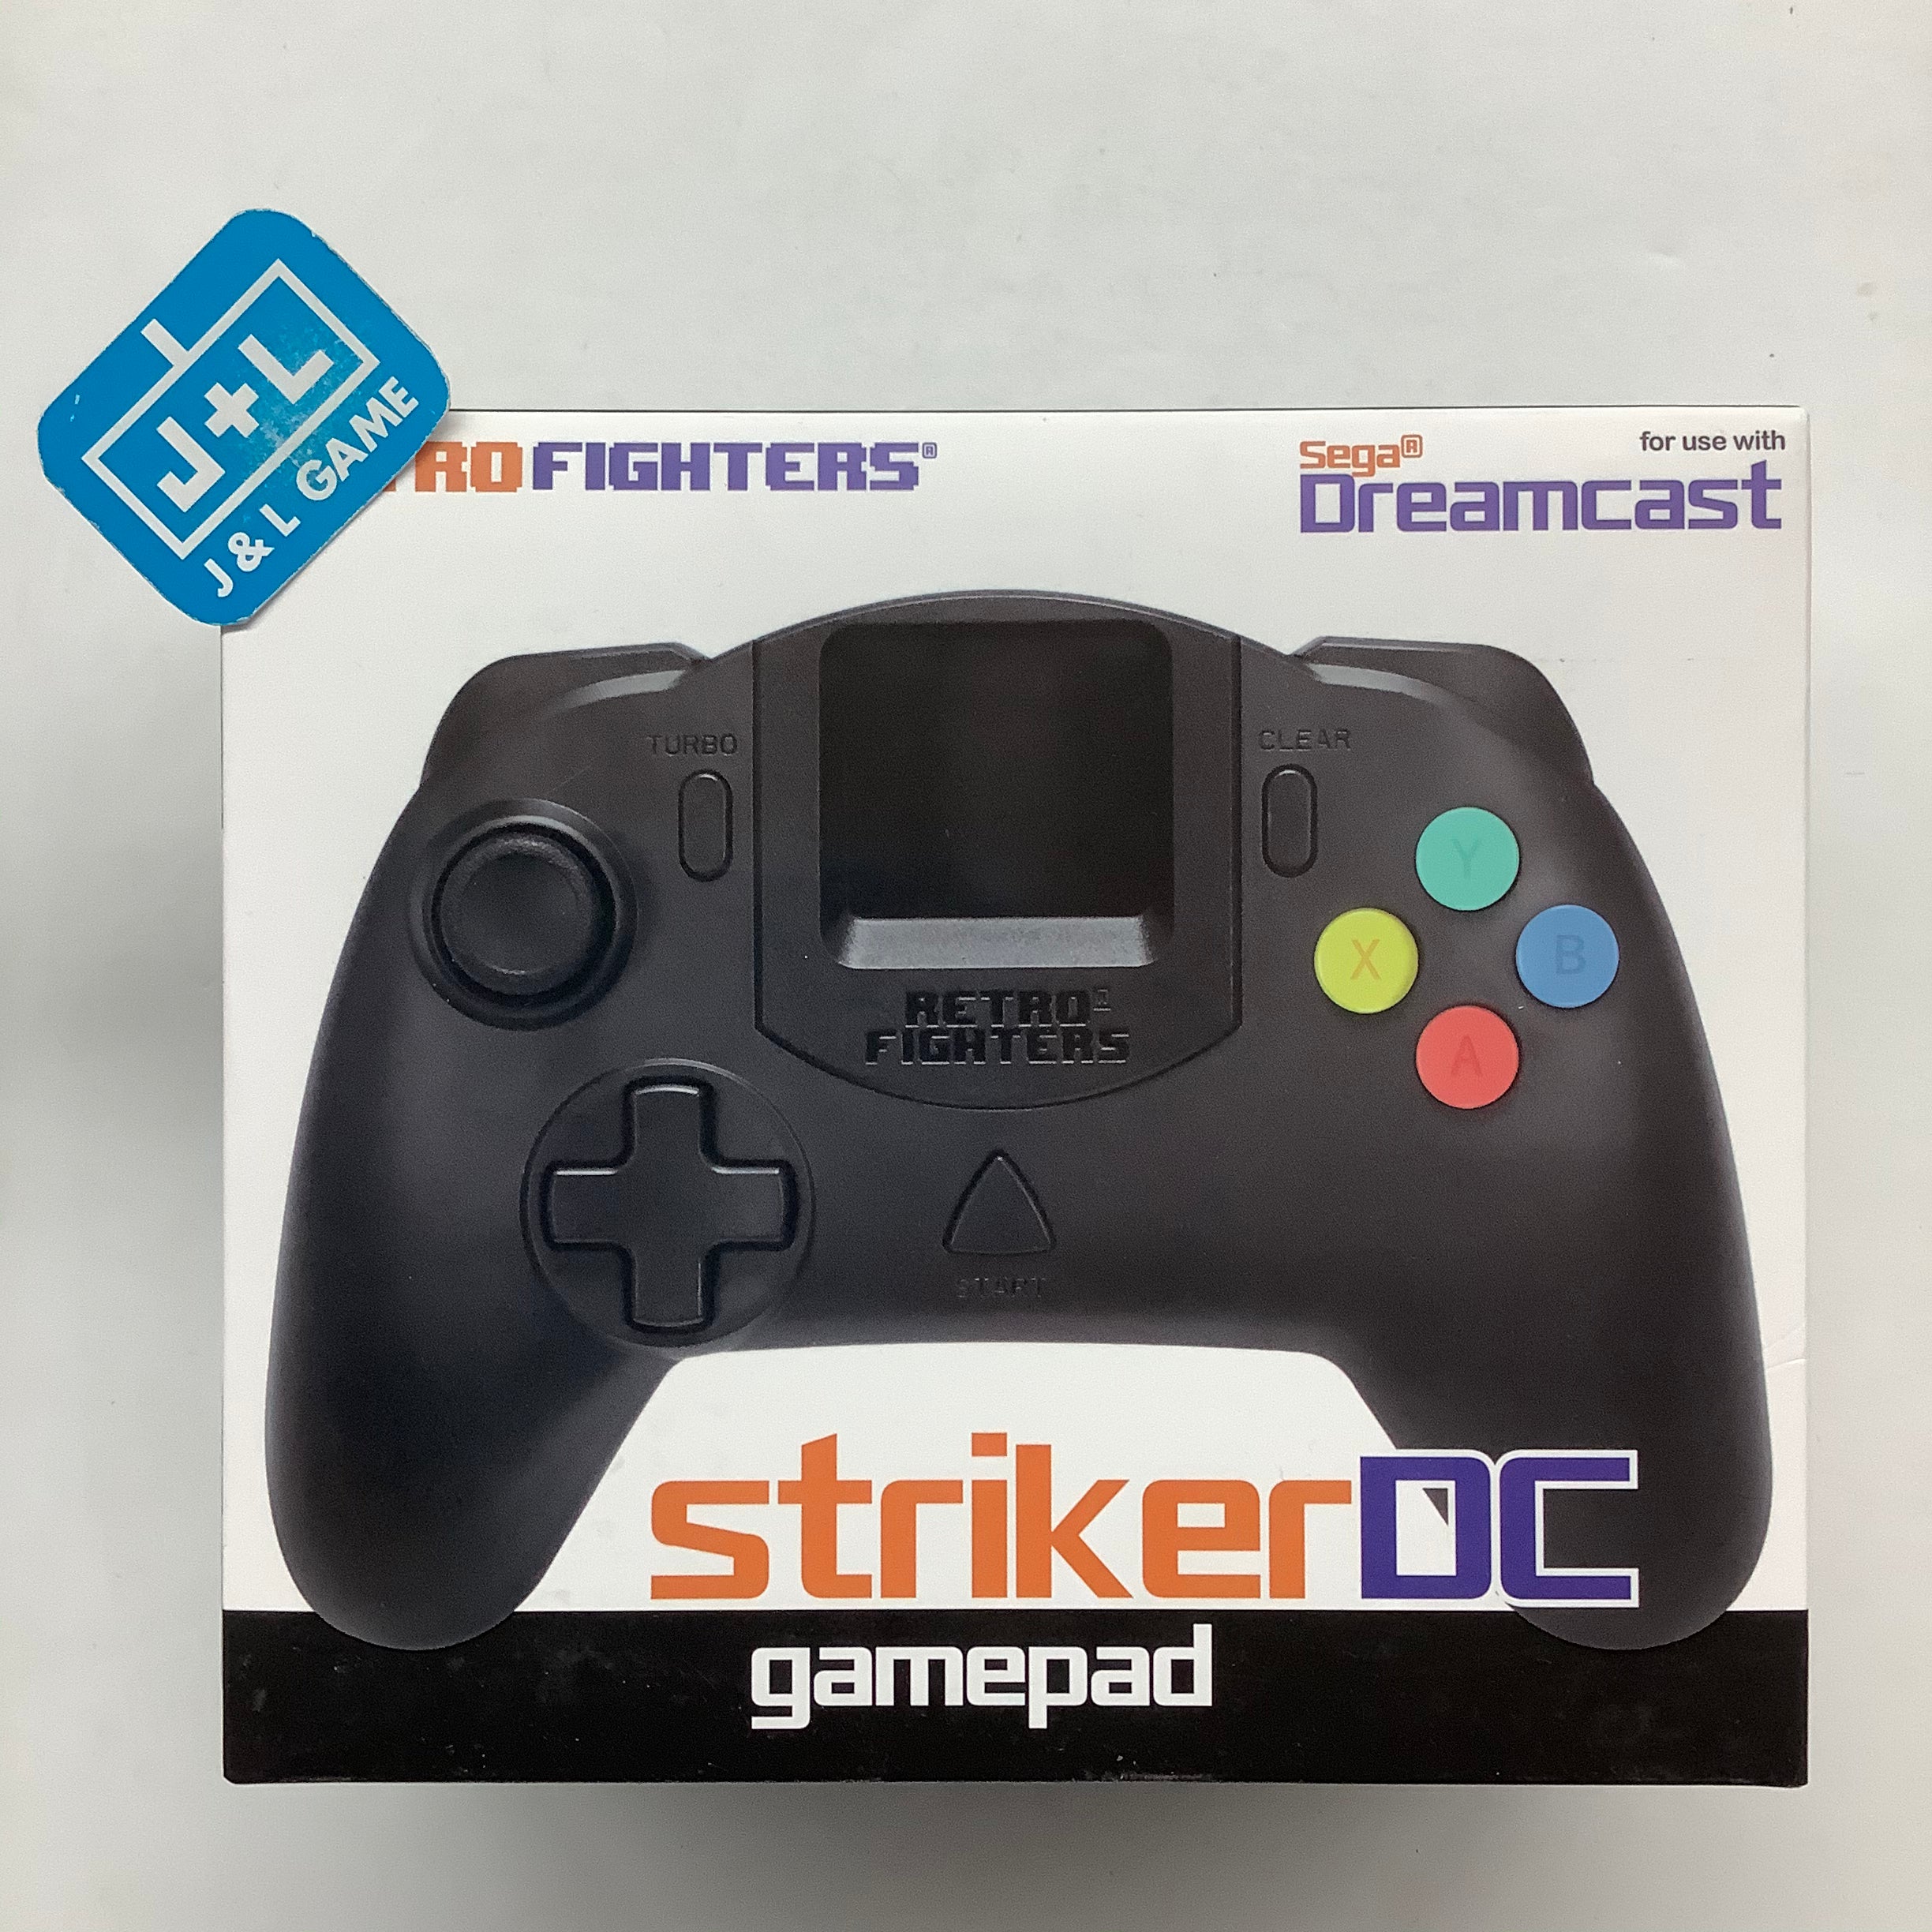 Retro Fighters Striker DC Dreamcast Controller ( Black ) - SEGA Dreamcast Accessories Retro Fighters   